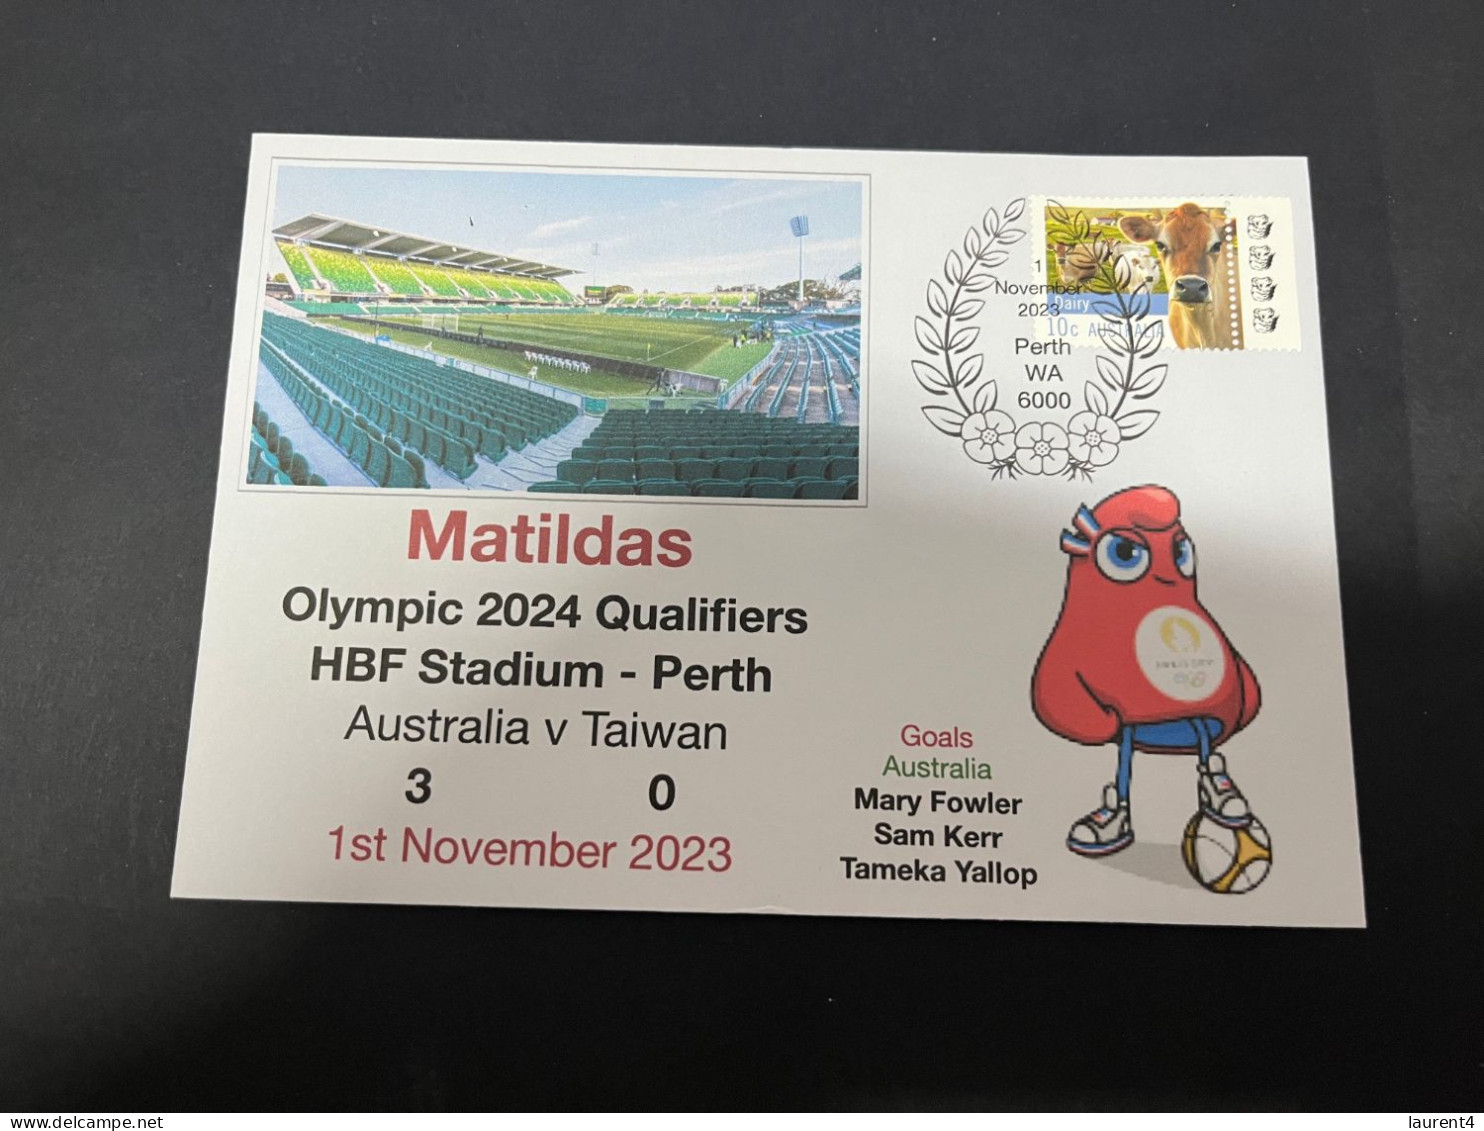 4-11-2023 (1 V 18) Australia (3) V Taiwan (0) - Matildas Olympic 2024 Qualifiers (match 3) 1-11-2023 In Perth - Zomer 2024: Parijs